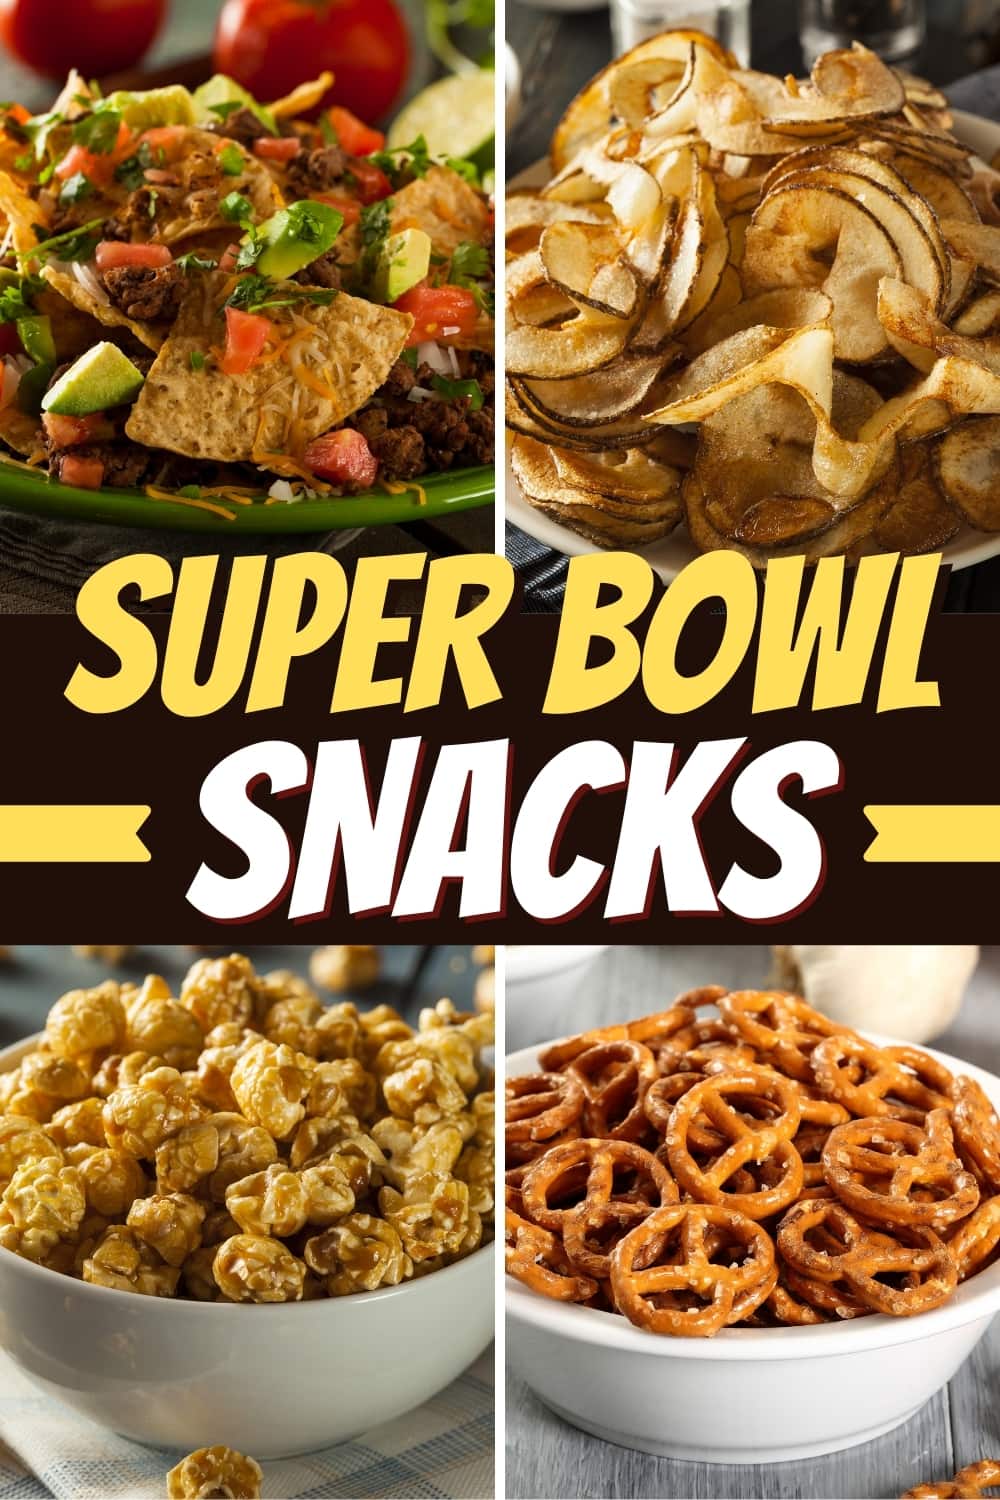 Top 10 Super Bowl Snacks - Image to u